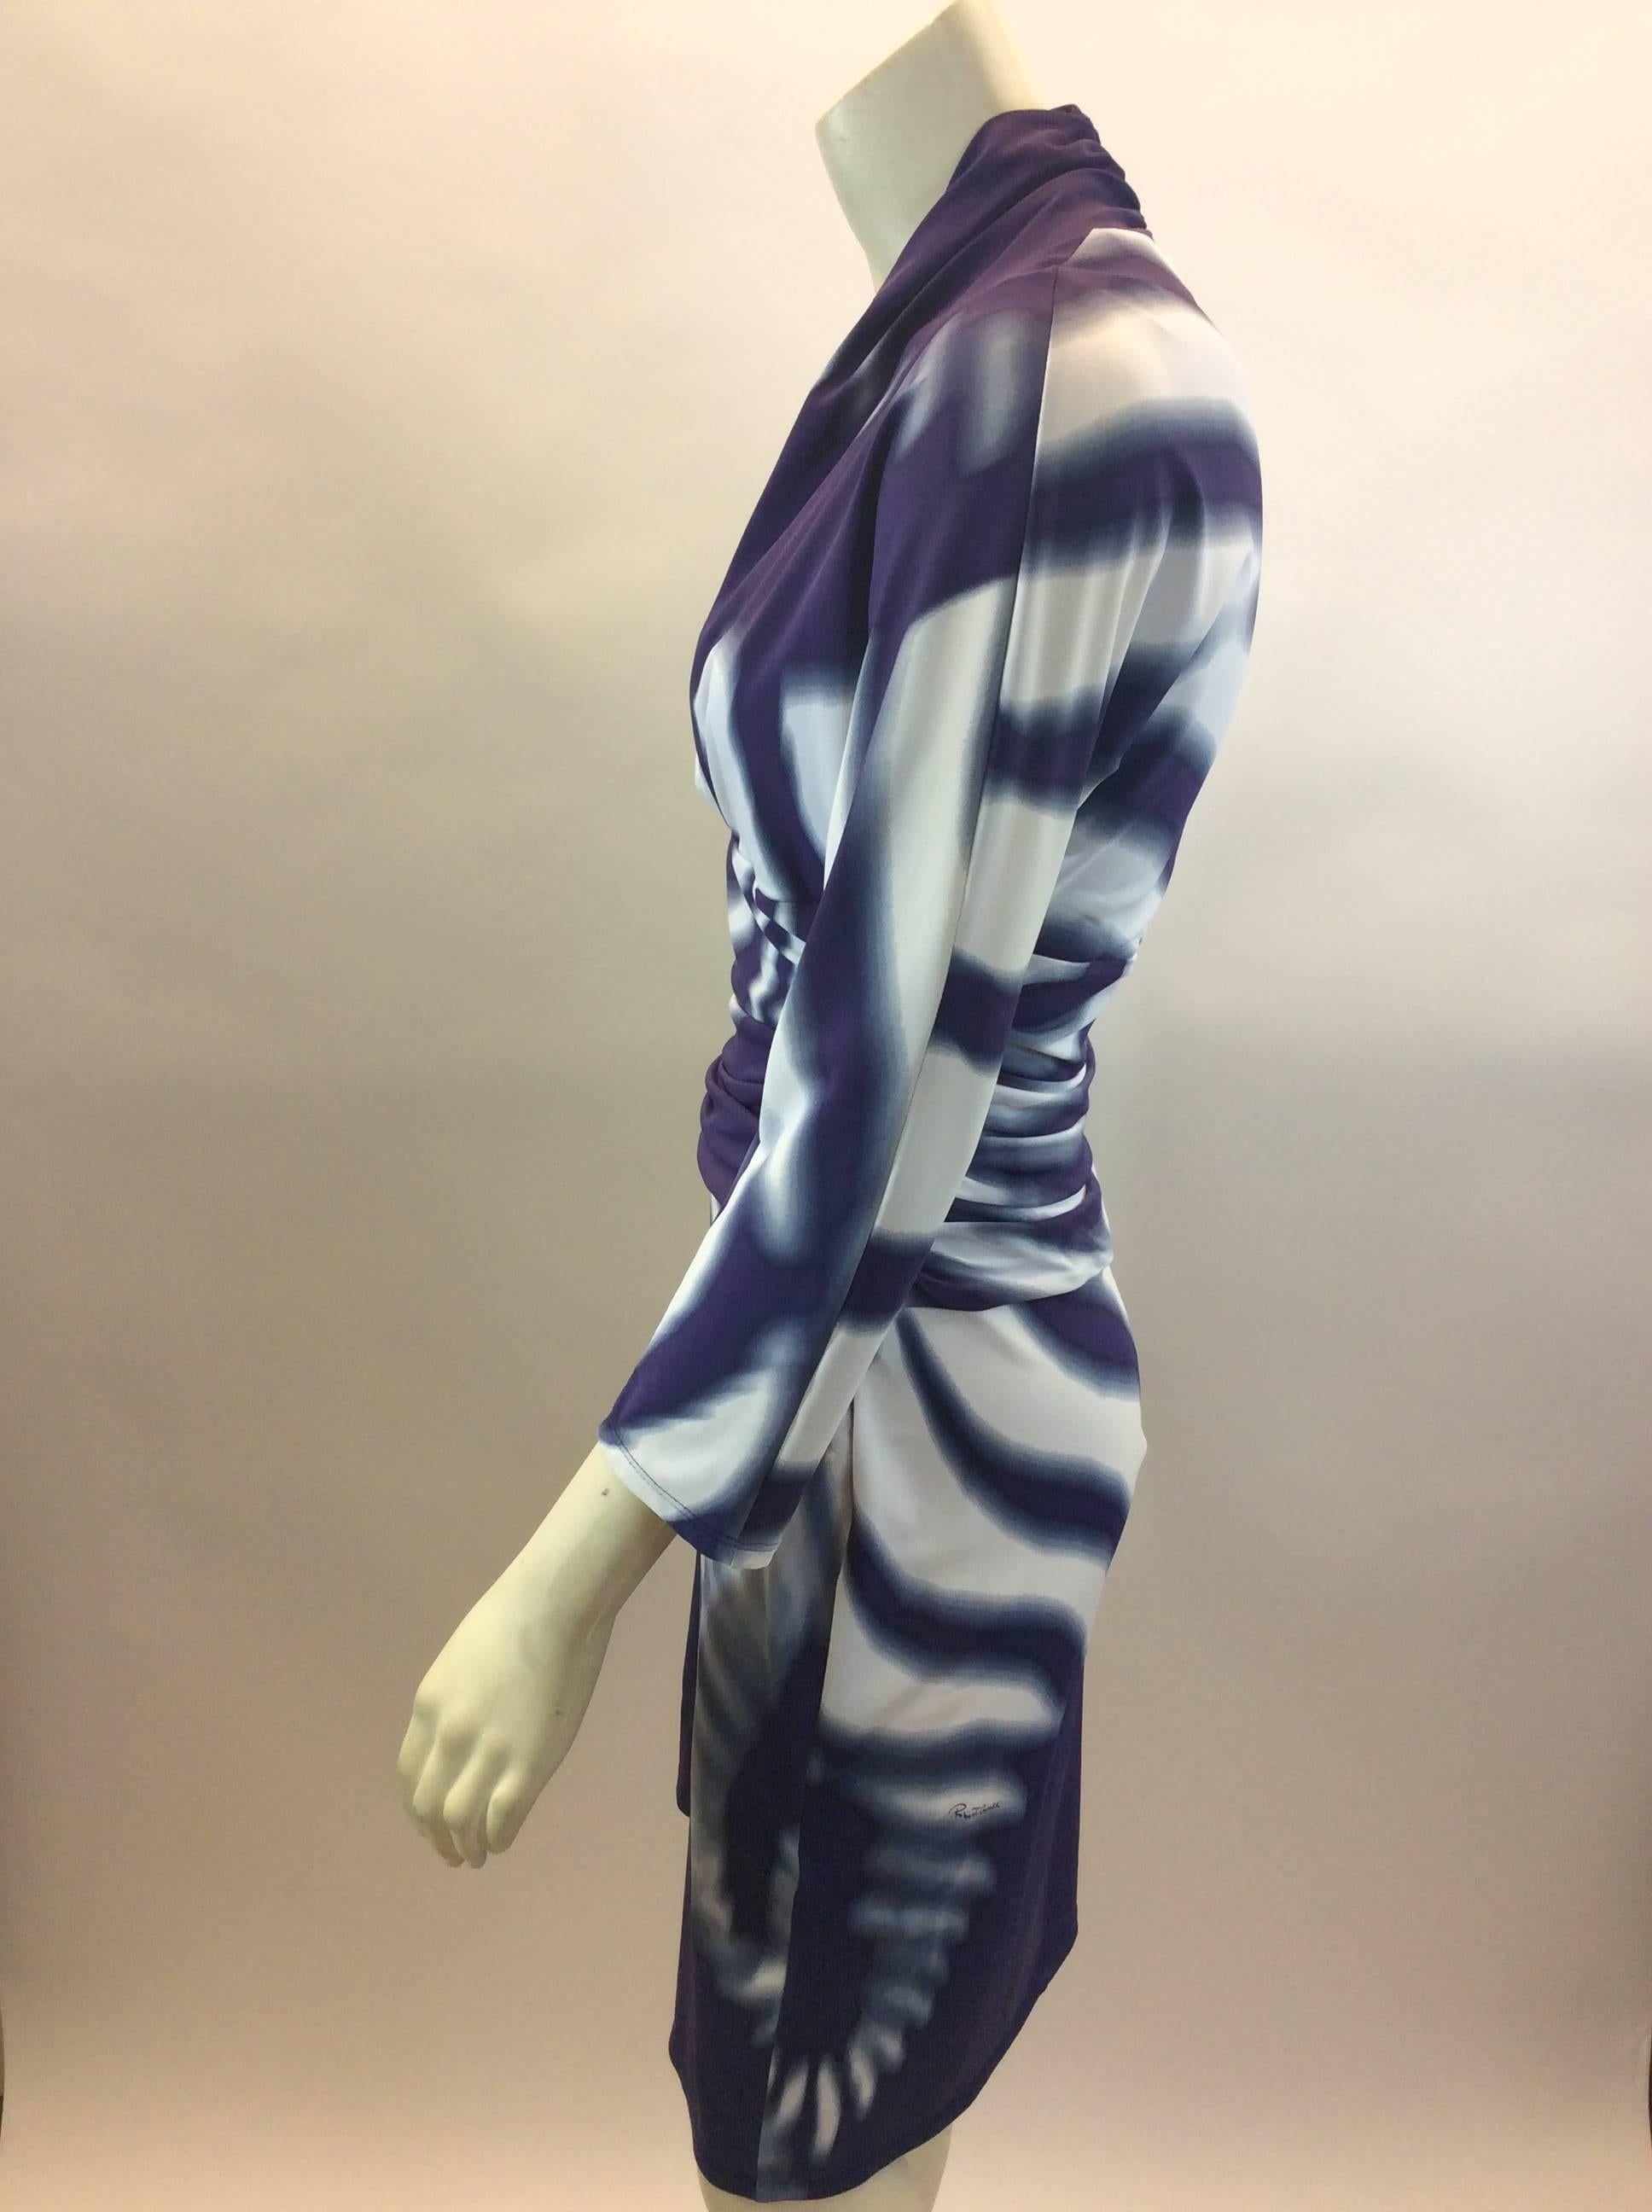 Roberto Cavalli Purple Print Dress
Size 42
Length 36